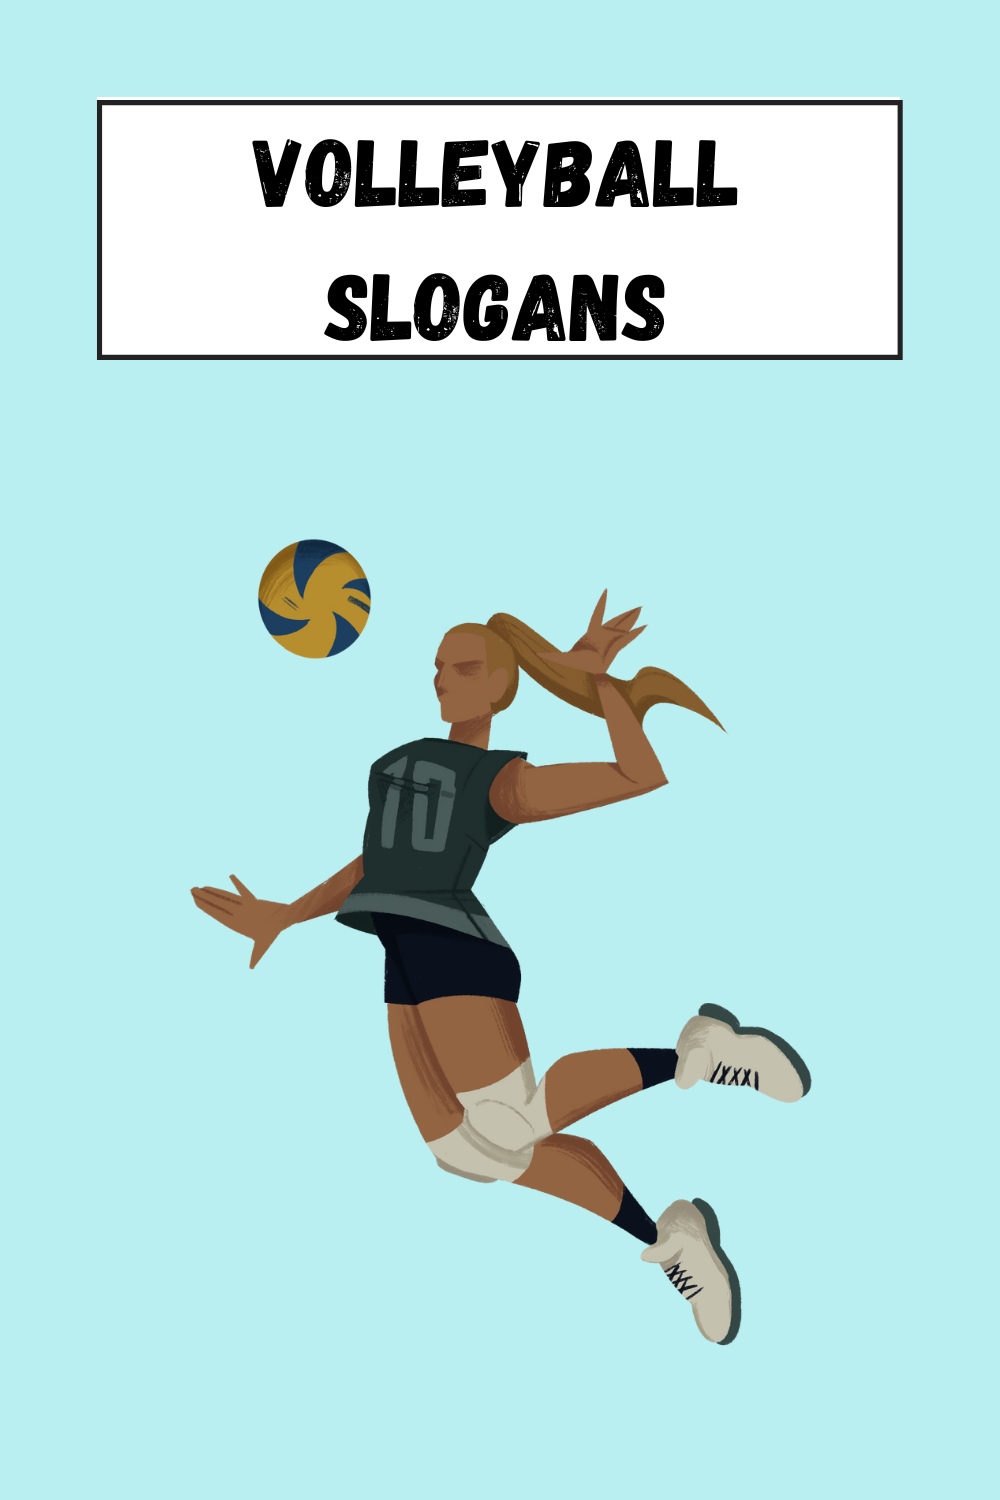 Volleyball Slogans: Bump, Set, Inspire